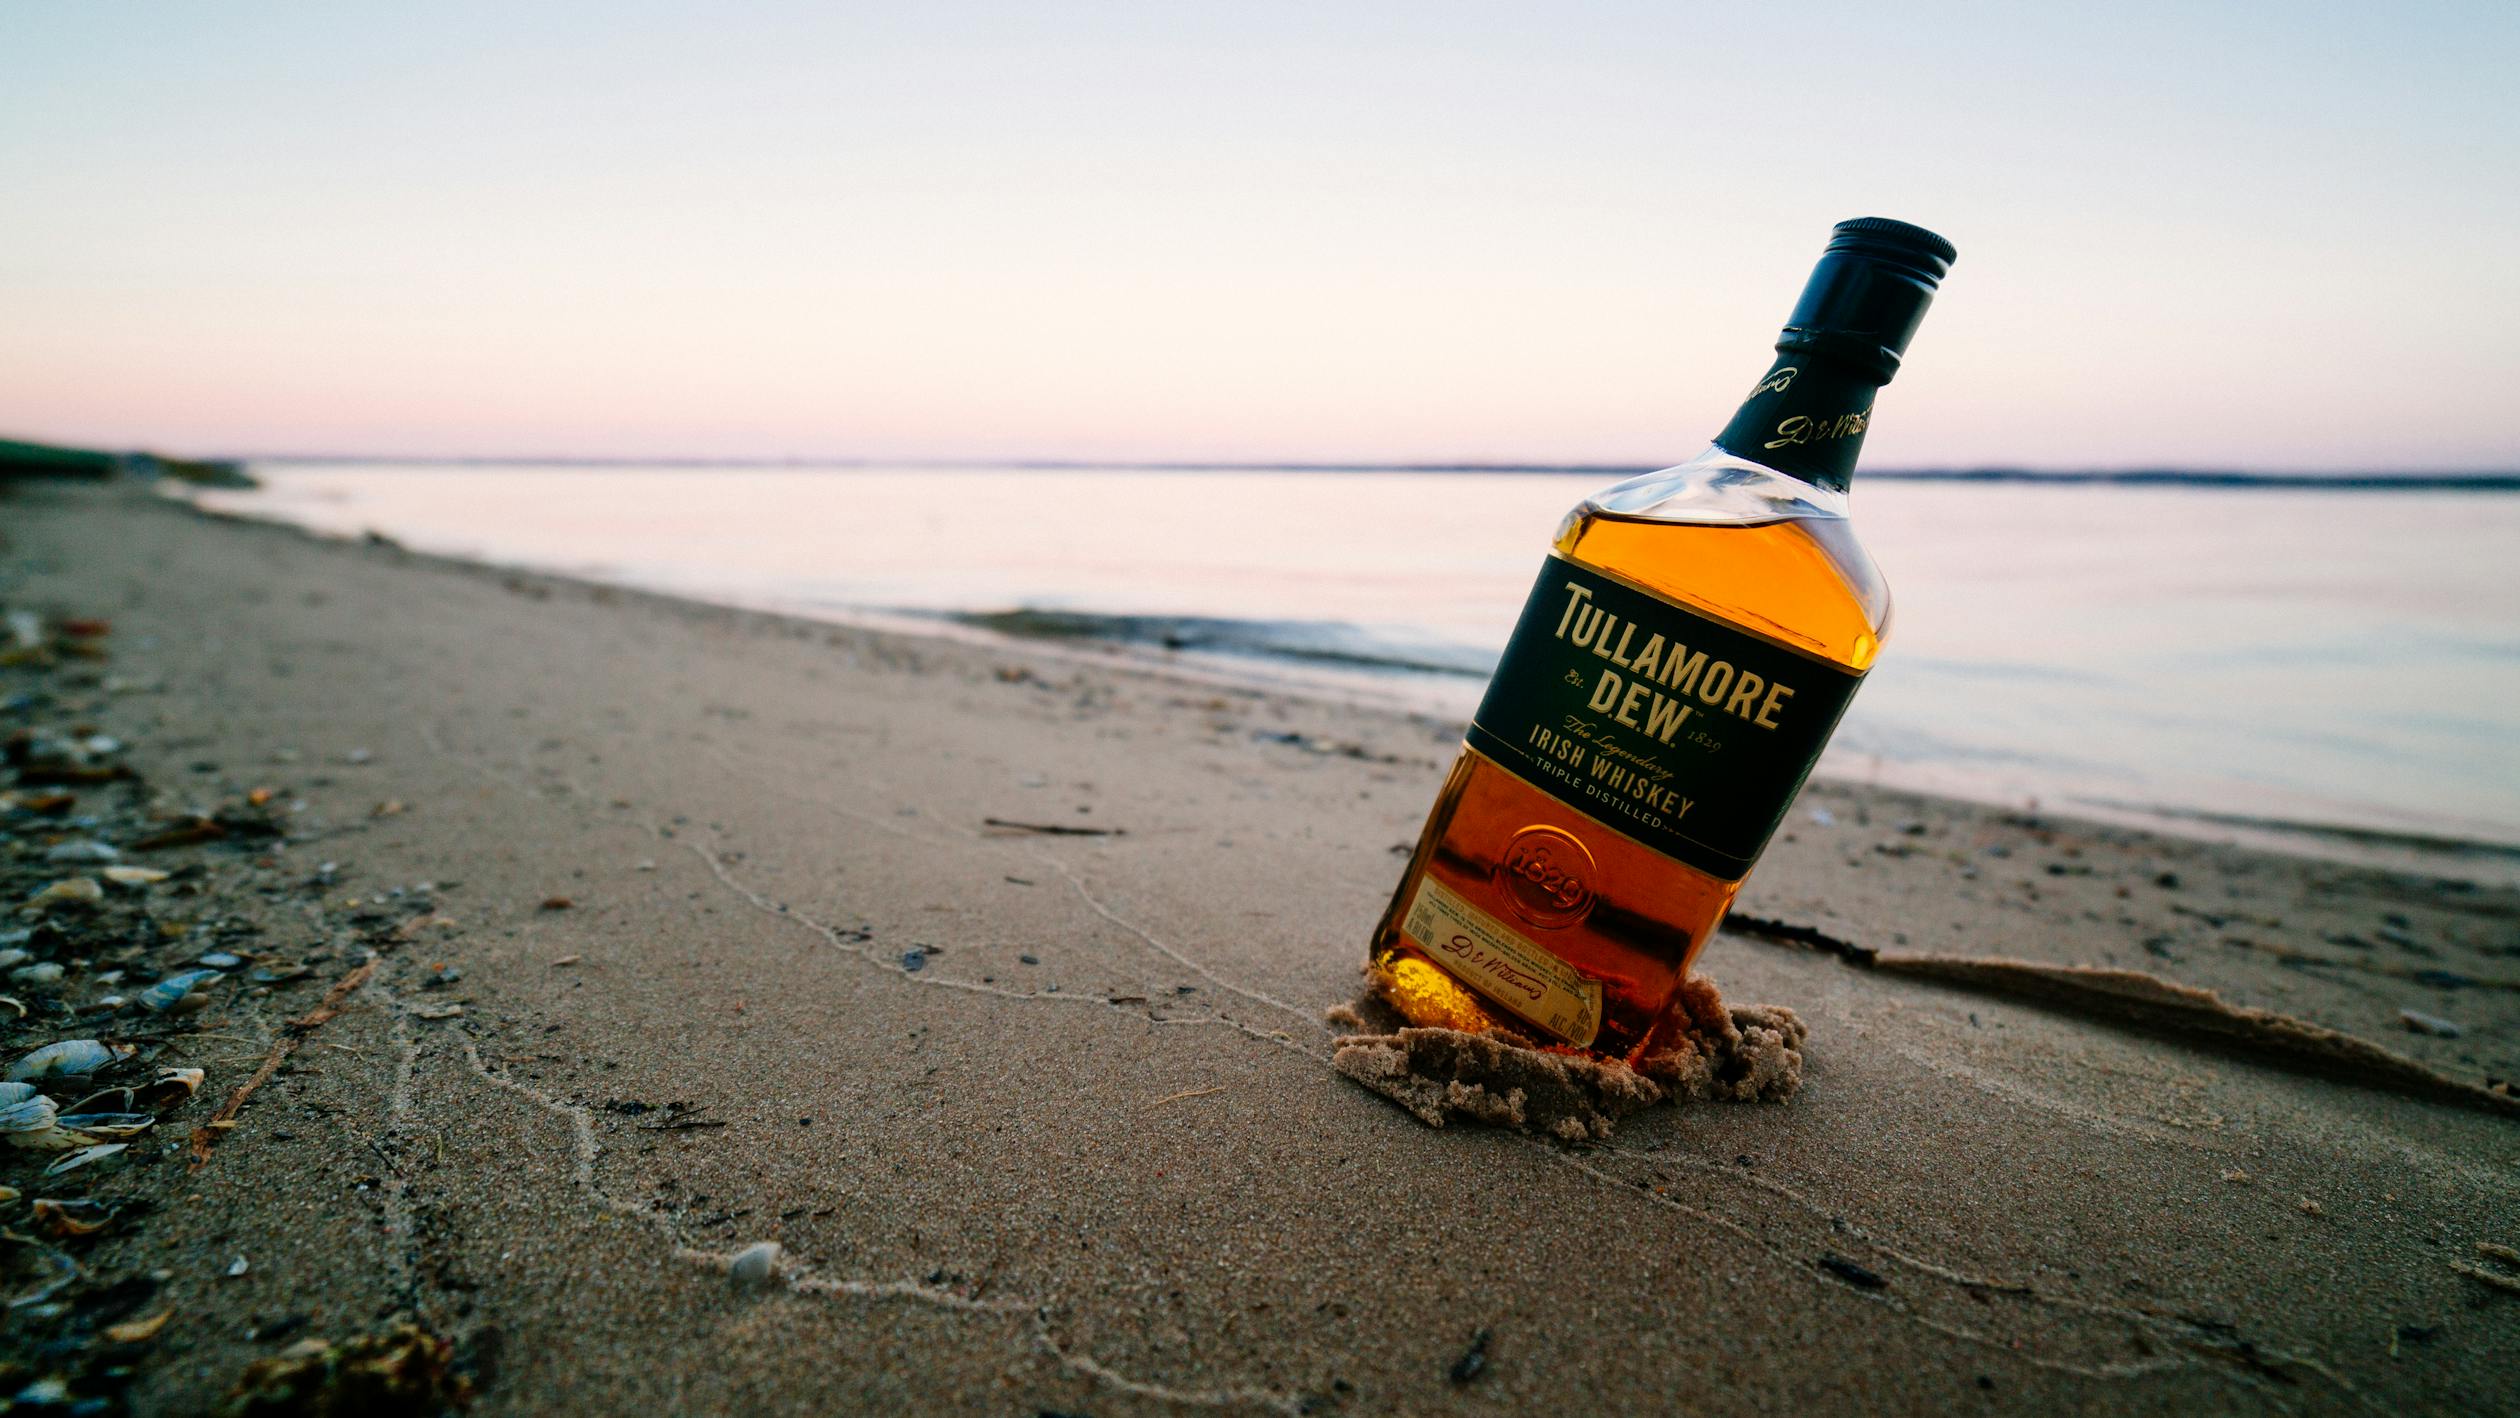 Bottle of whiskey on sandy beach near sea under sky · Free Stock Photo